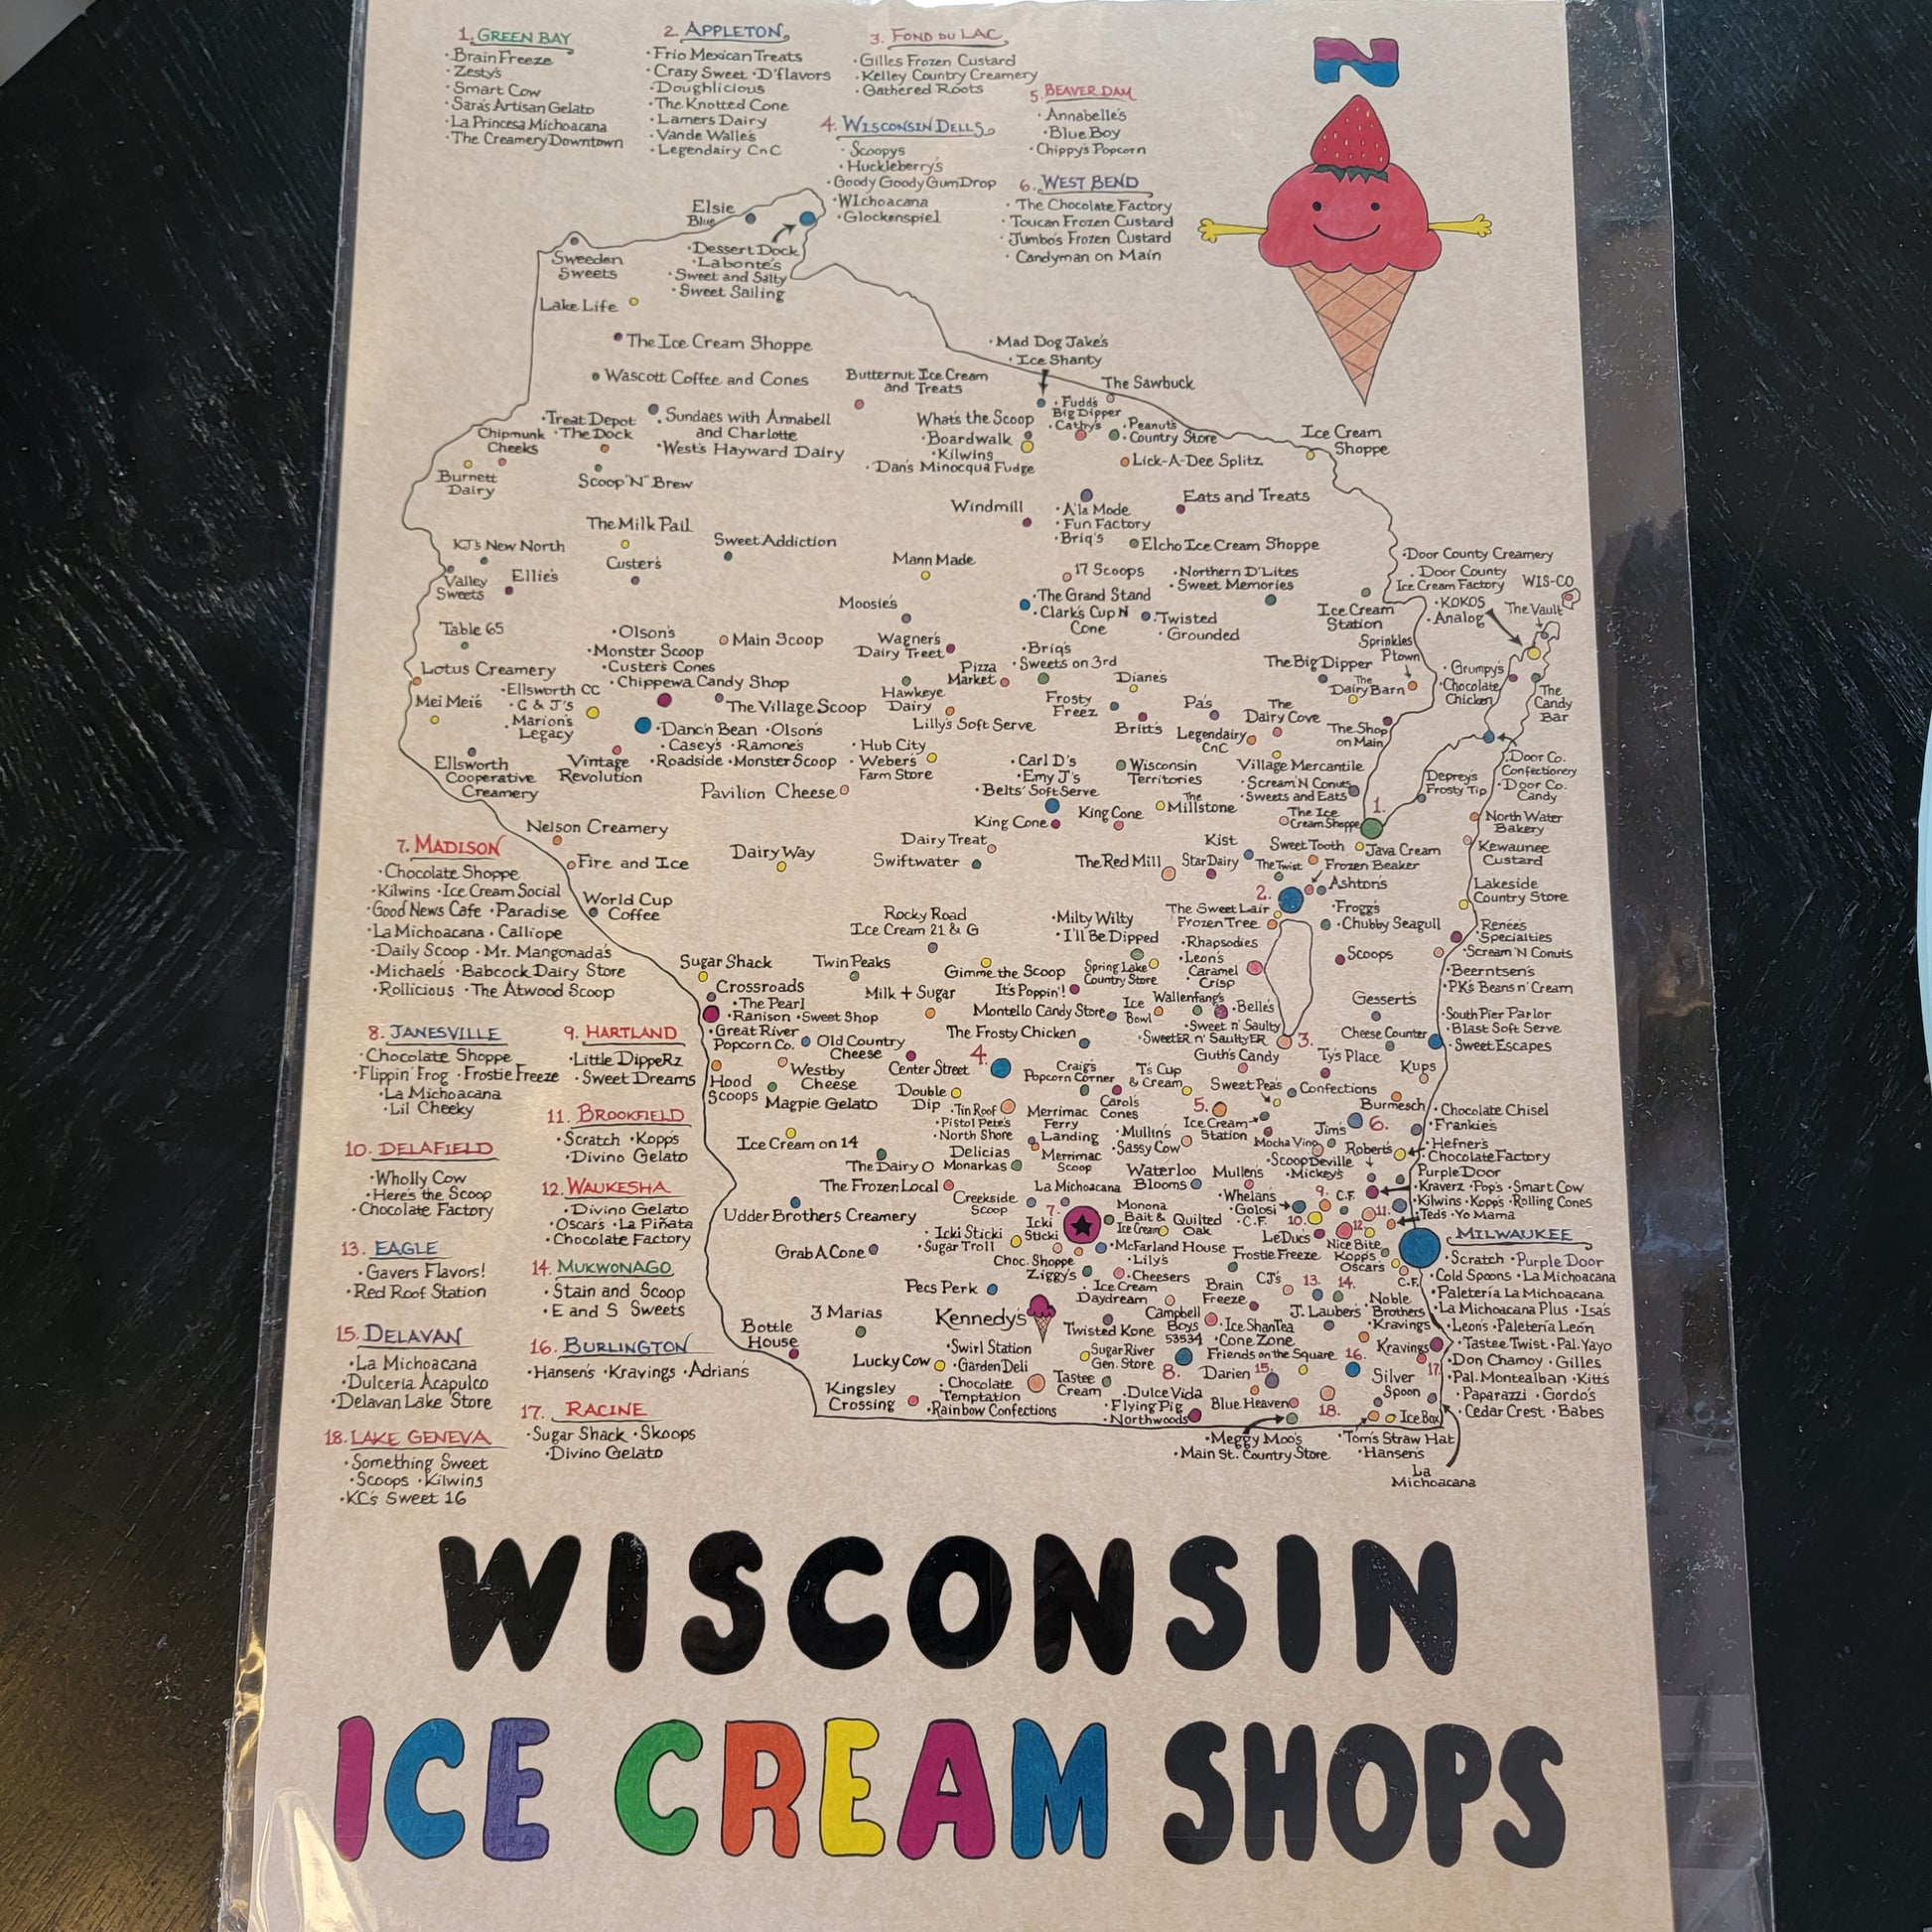 Ice cream shops in Wisconsin